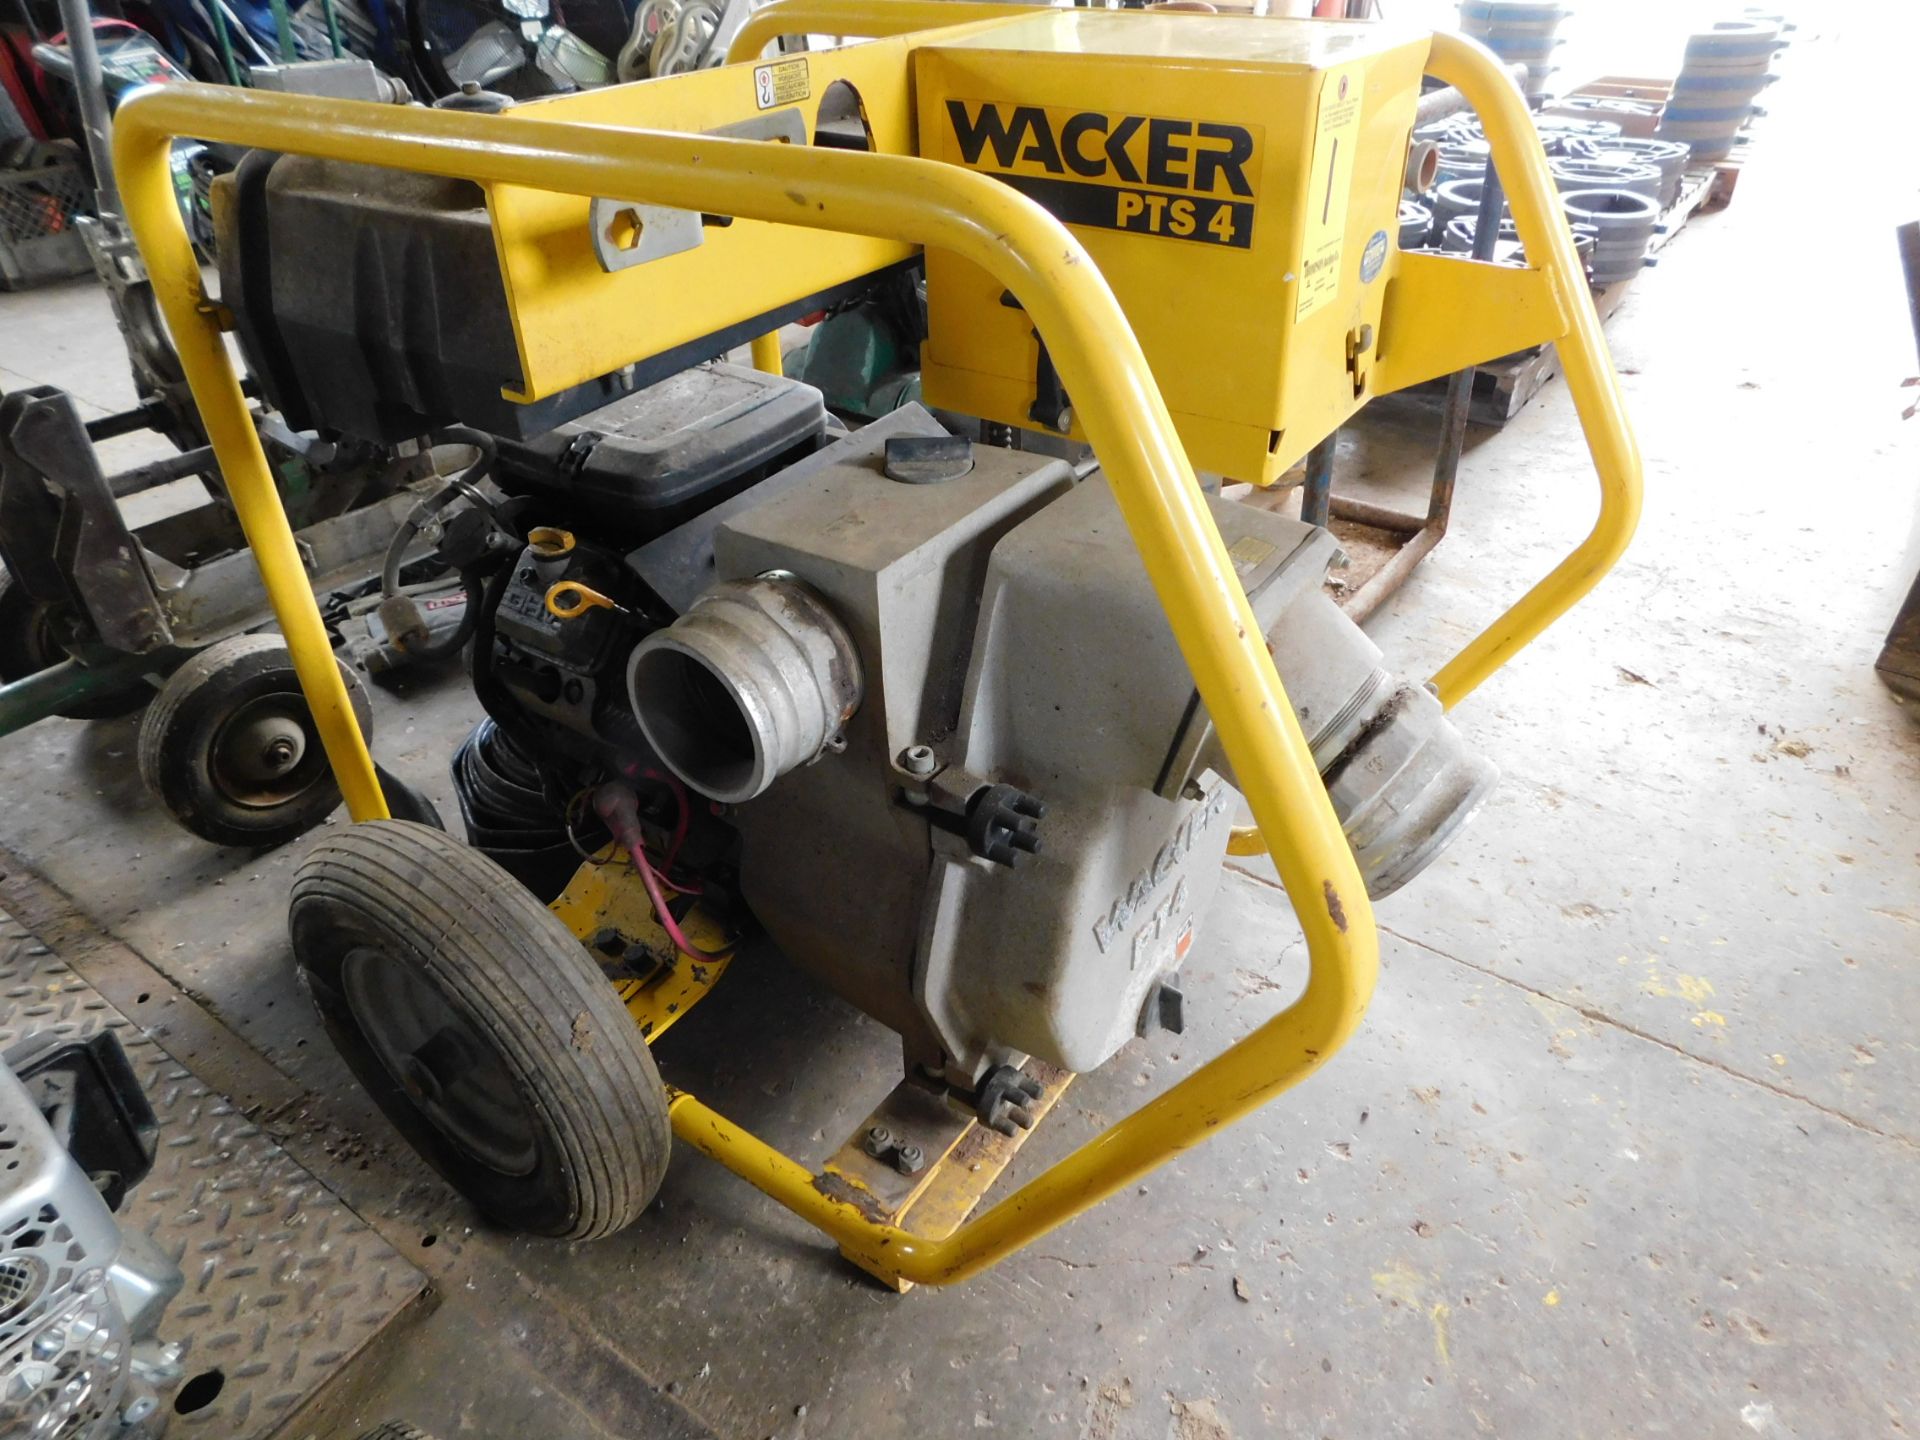 Wacker Model PTS4 Gas Powered 4" Trash Pump, with Vanguard 16 HP Gas Engine